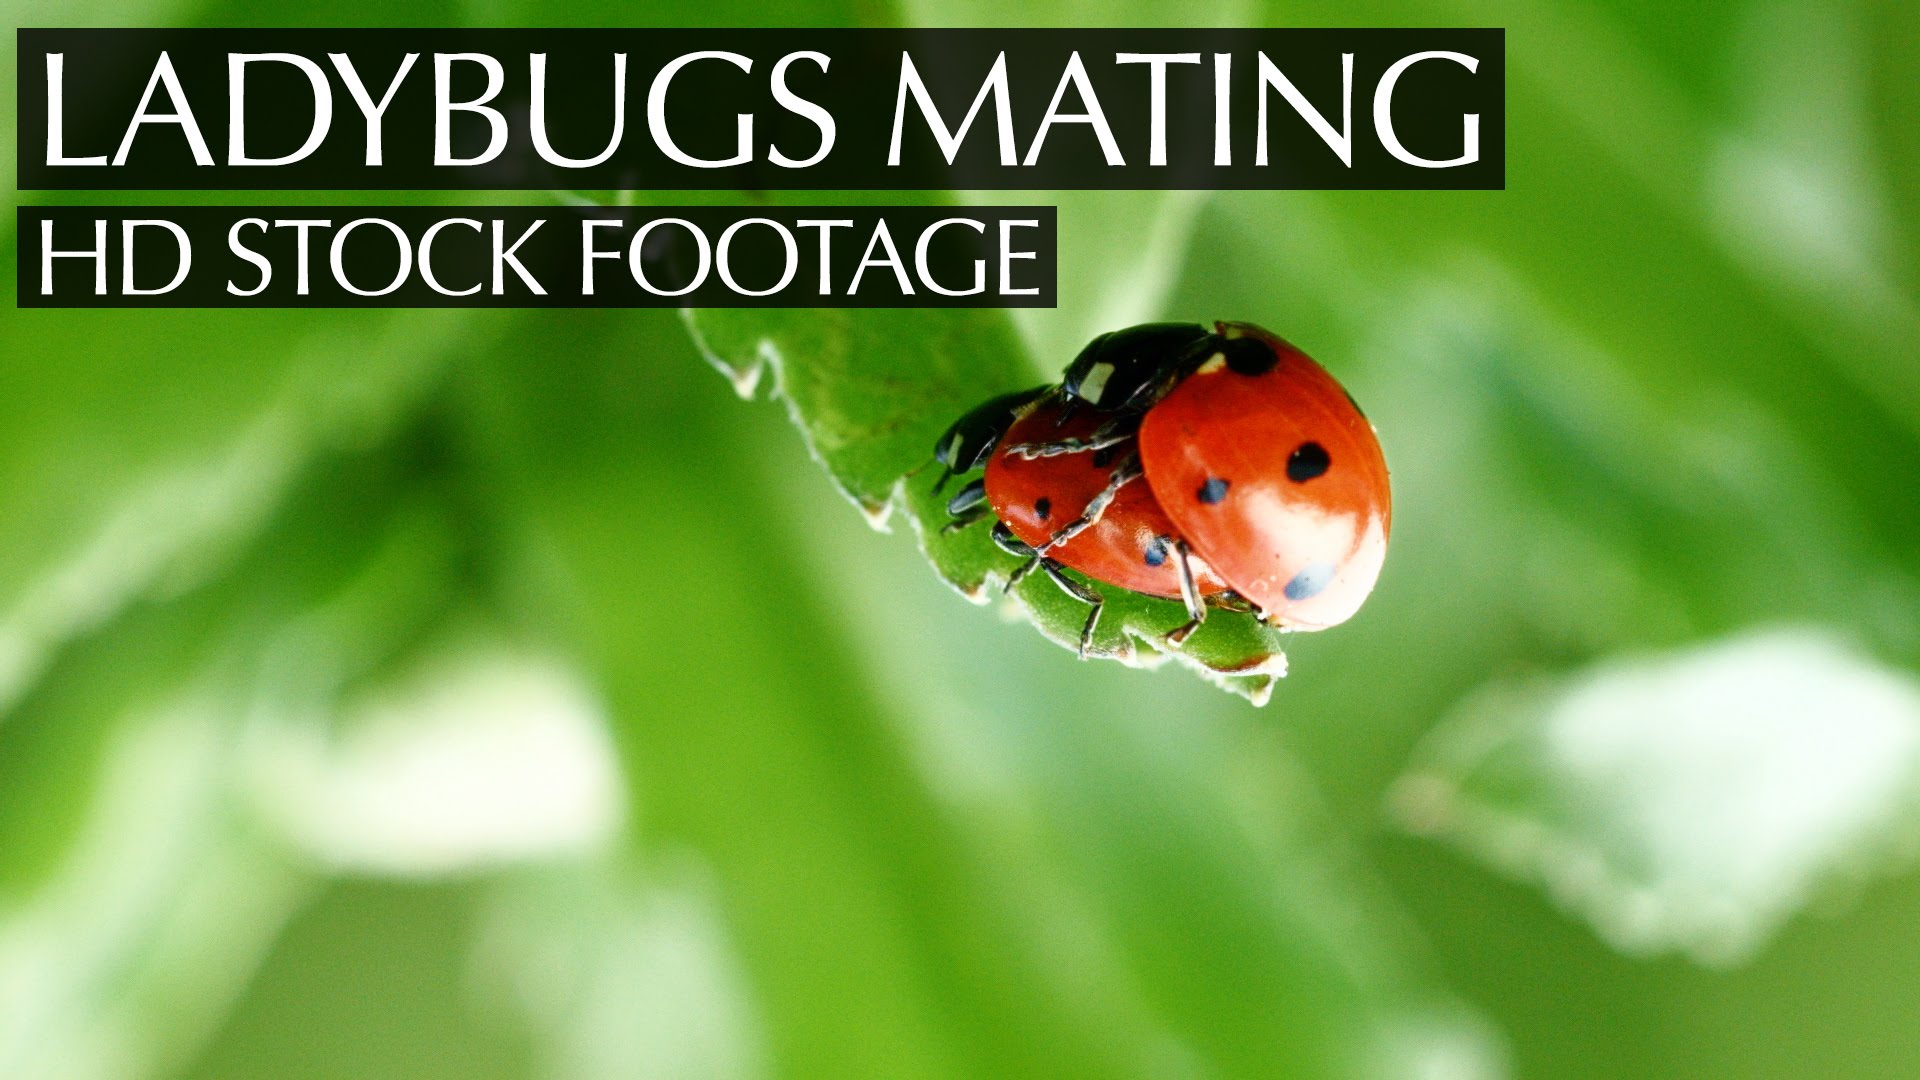 extreme close-up ladybug mating / HD Stock Footage Screener - YouTube